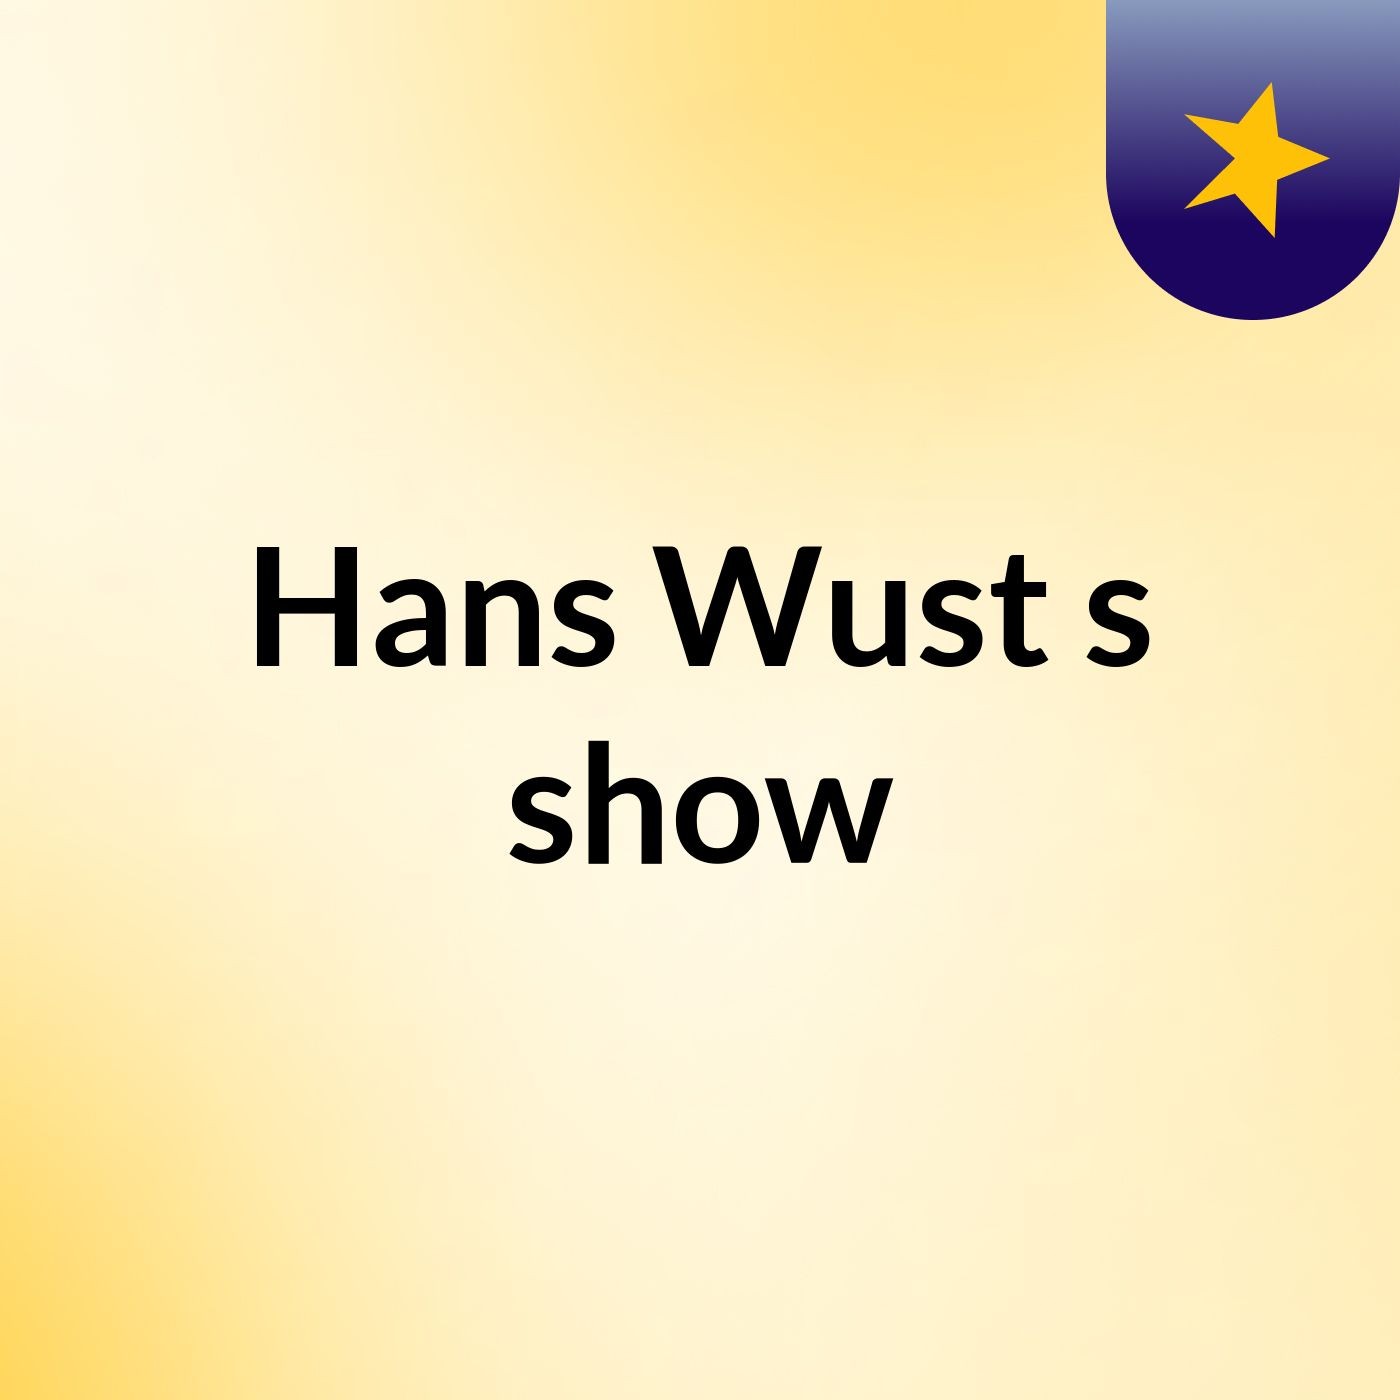 Hans Wust's show